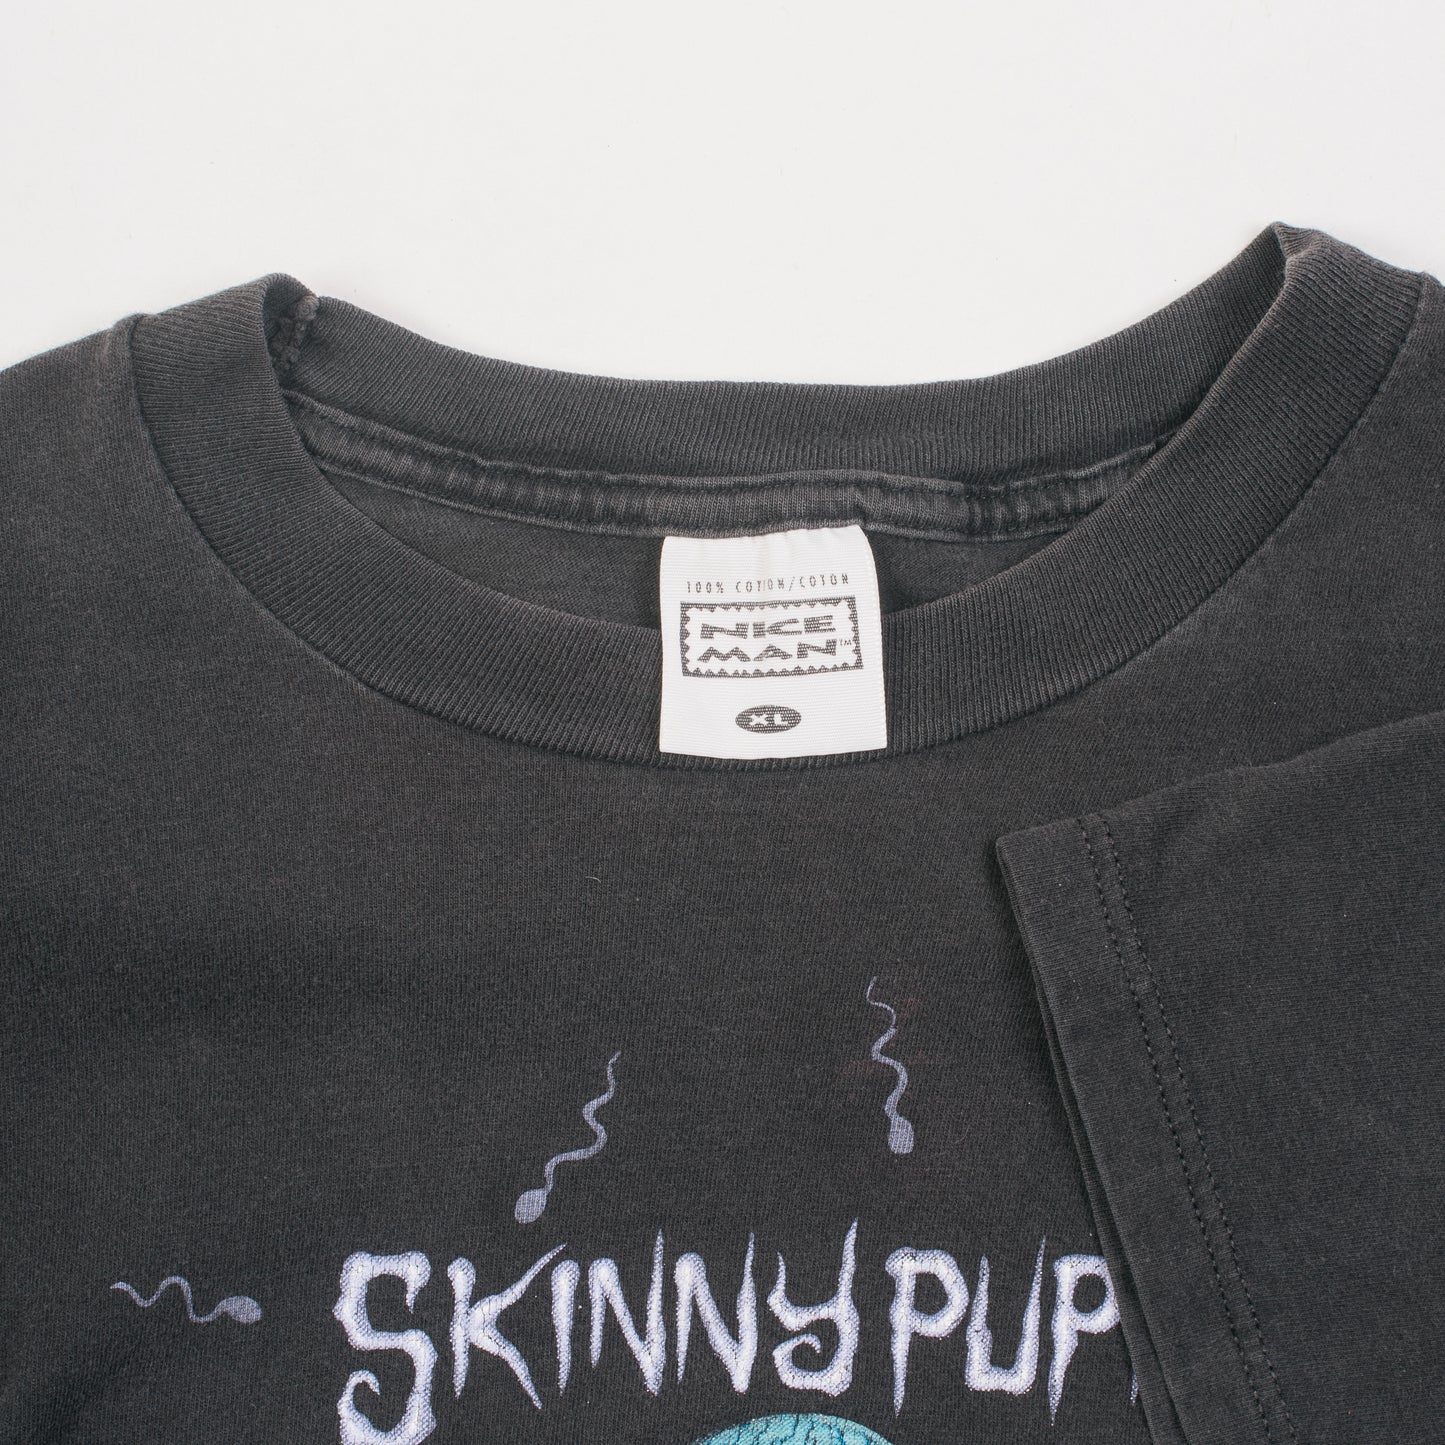 Vintage 1993 Skinny Puppy T-Shirt